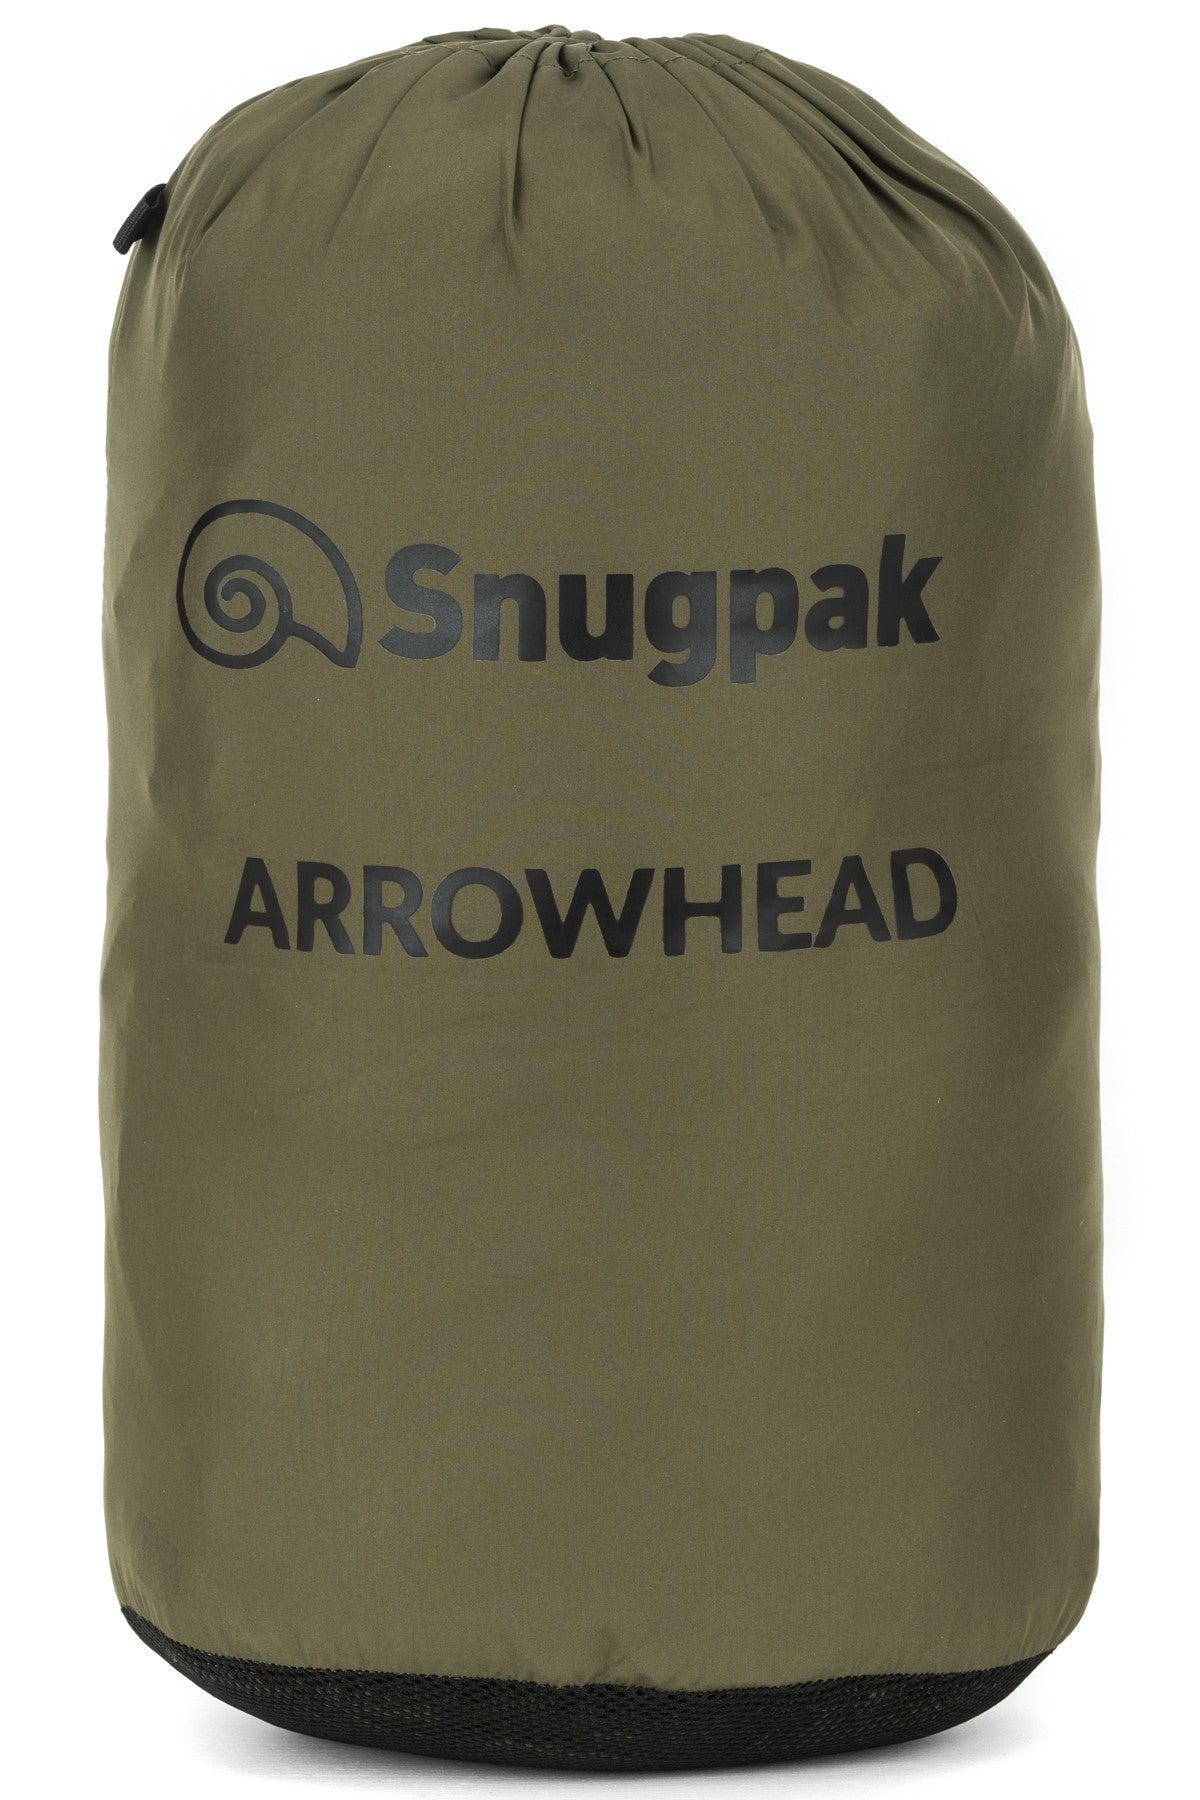 Snugpak Arrowhead Multicam Jacket -10'C Low